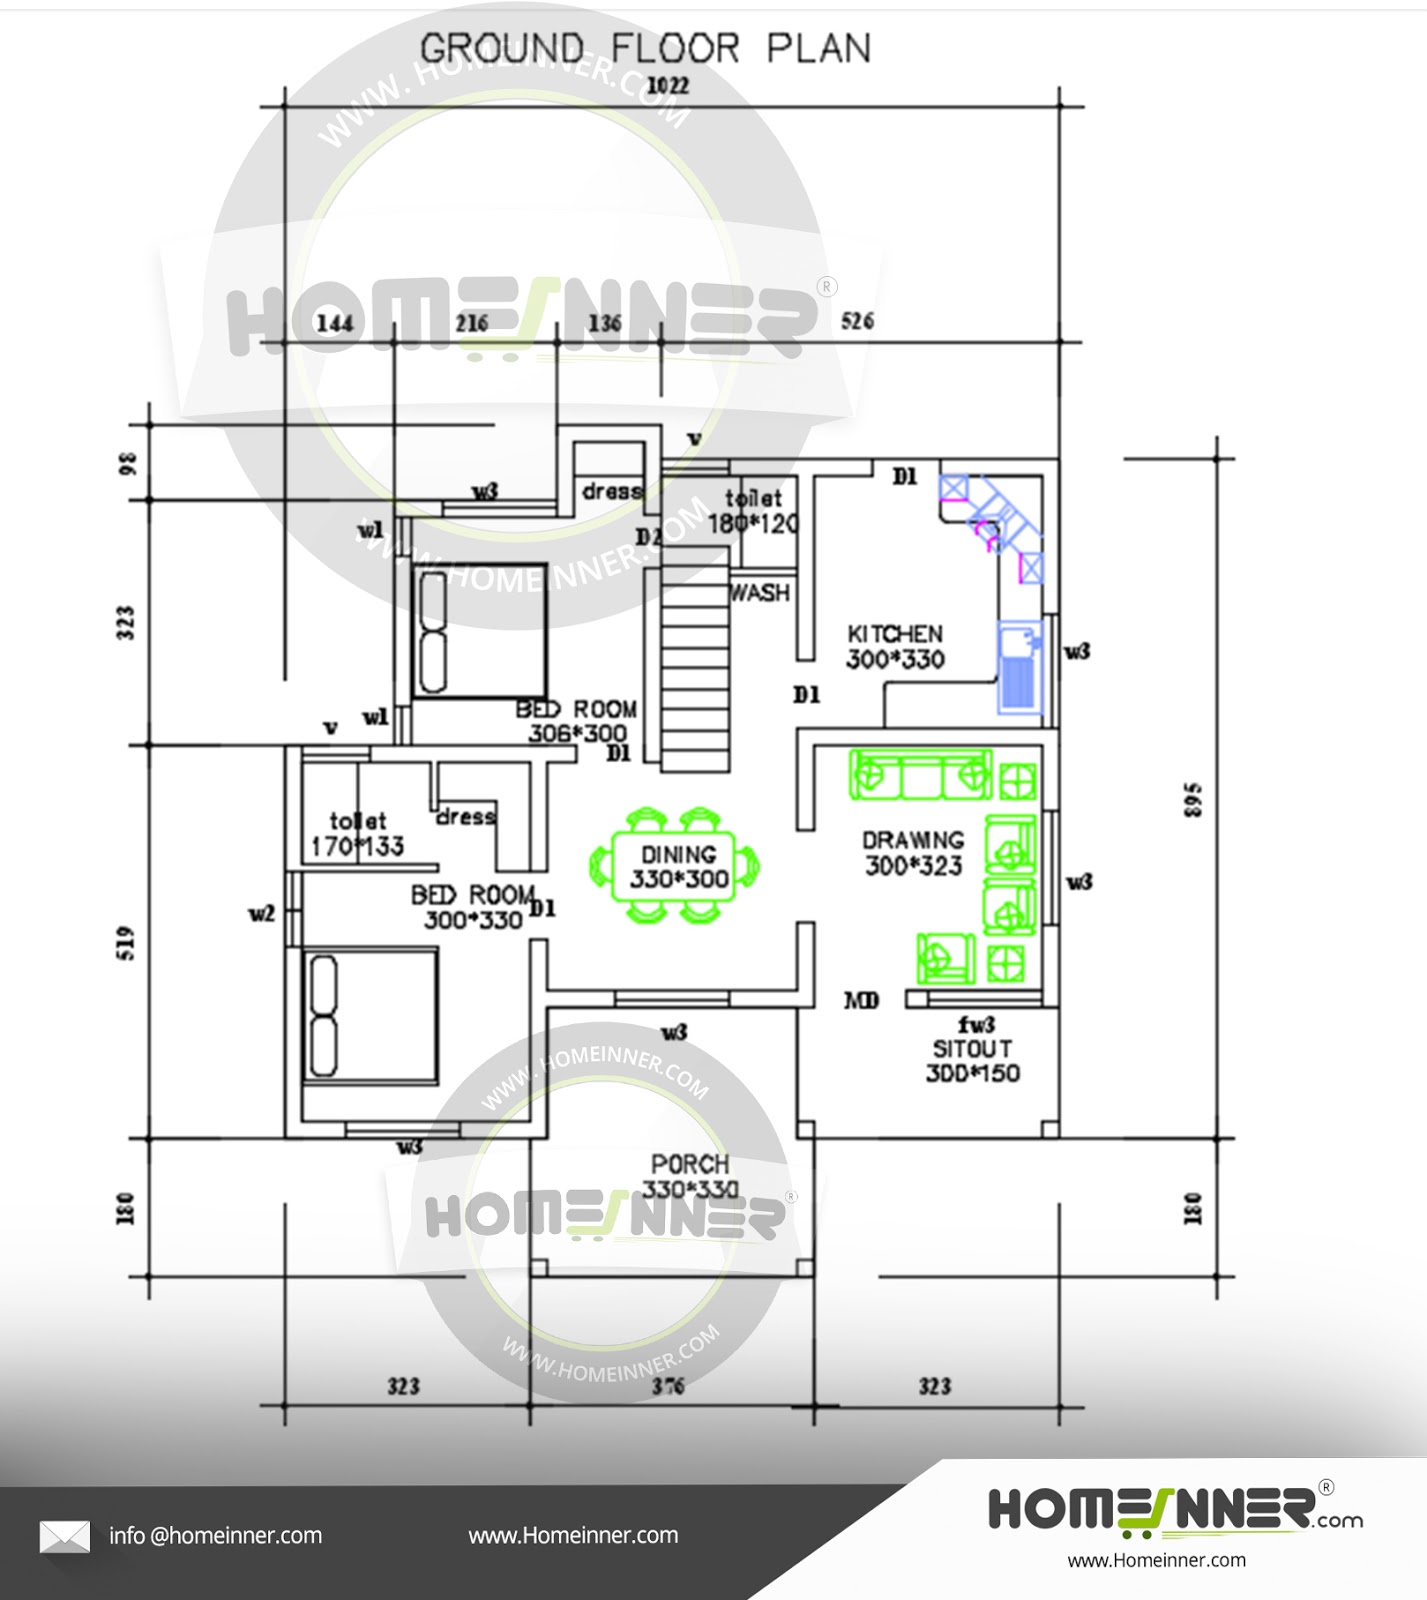 7 Lakh Budget villa Free house plan 900 sq ft 2 Bedroom